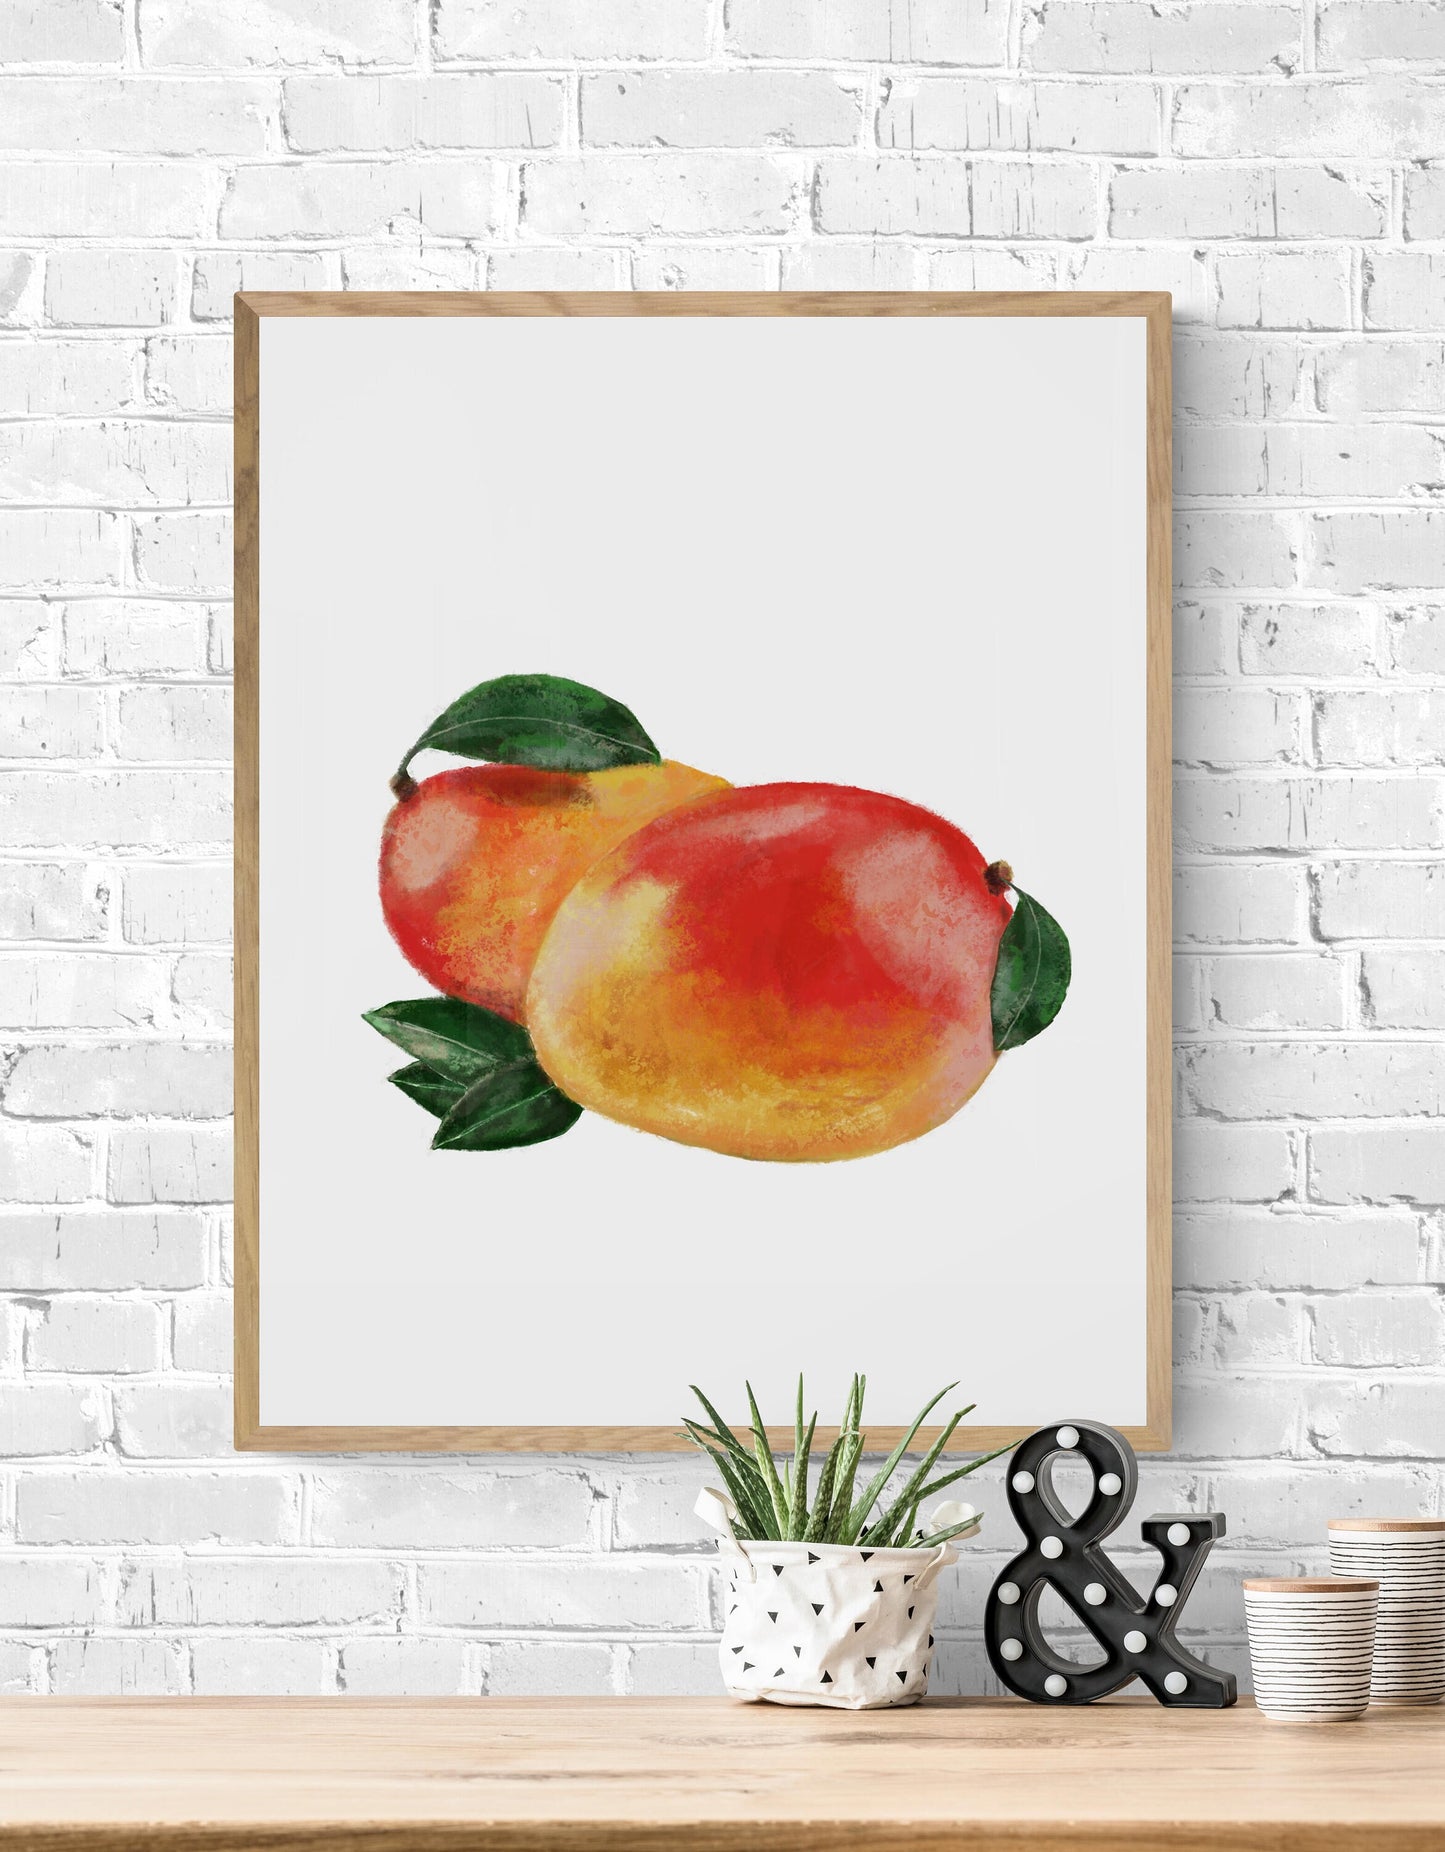 Mango Art Print, Mango Wall Art, Kitchen Wall Hanging, Dining Room Decor, Tropical Fruit Painting, Fruit Illustration, Farmhouse Wall Decor